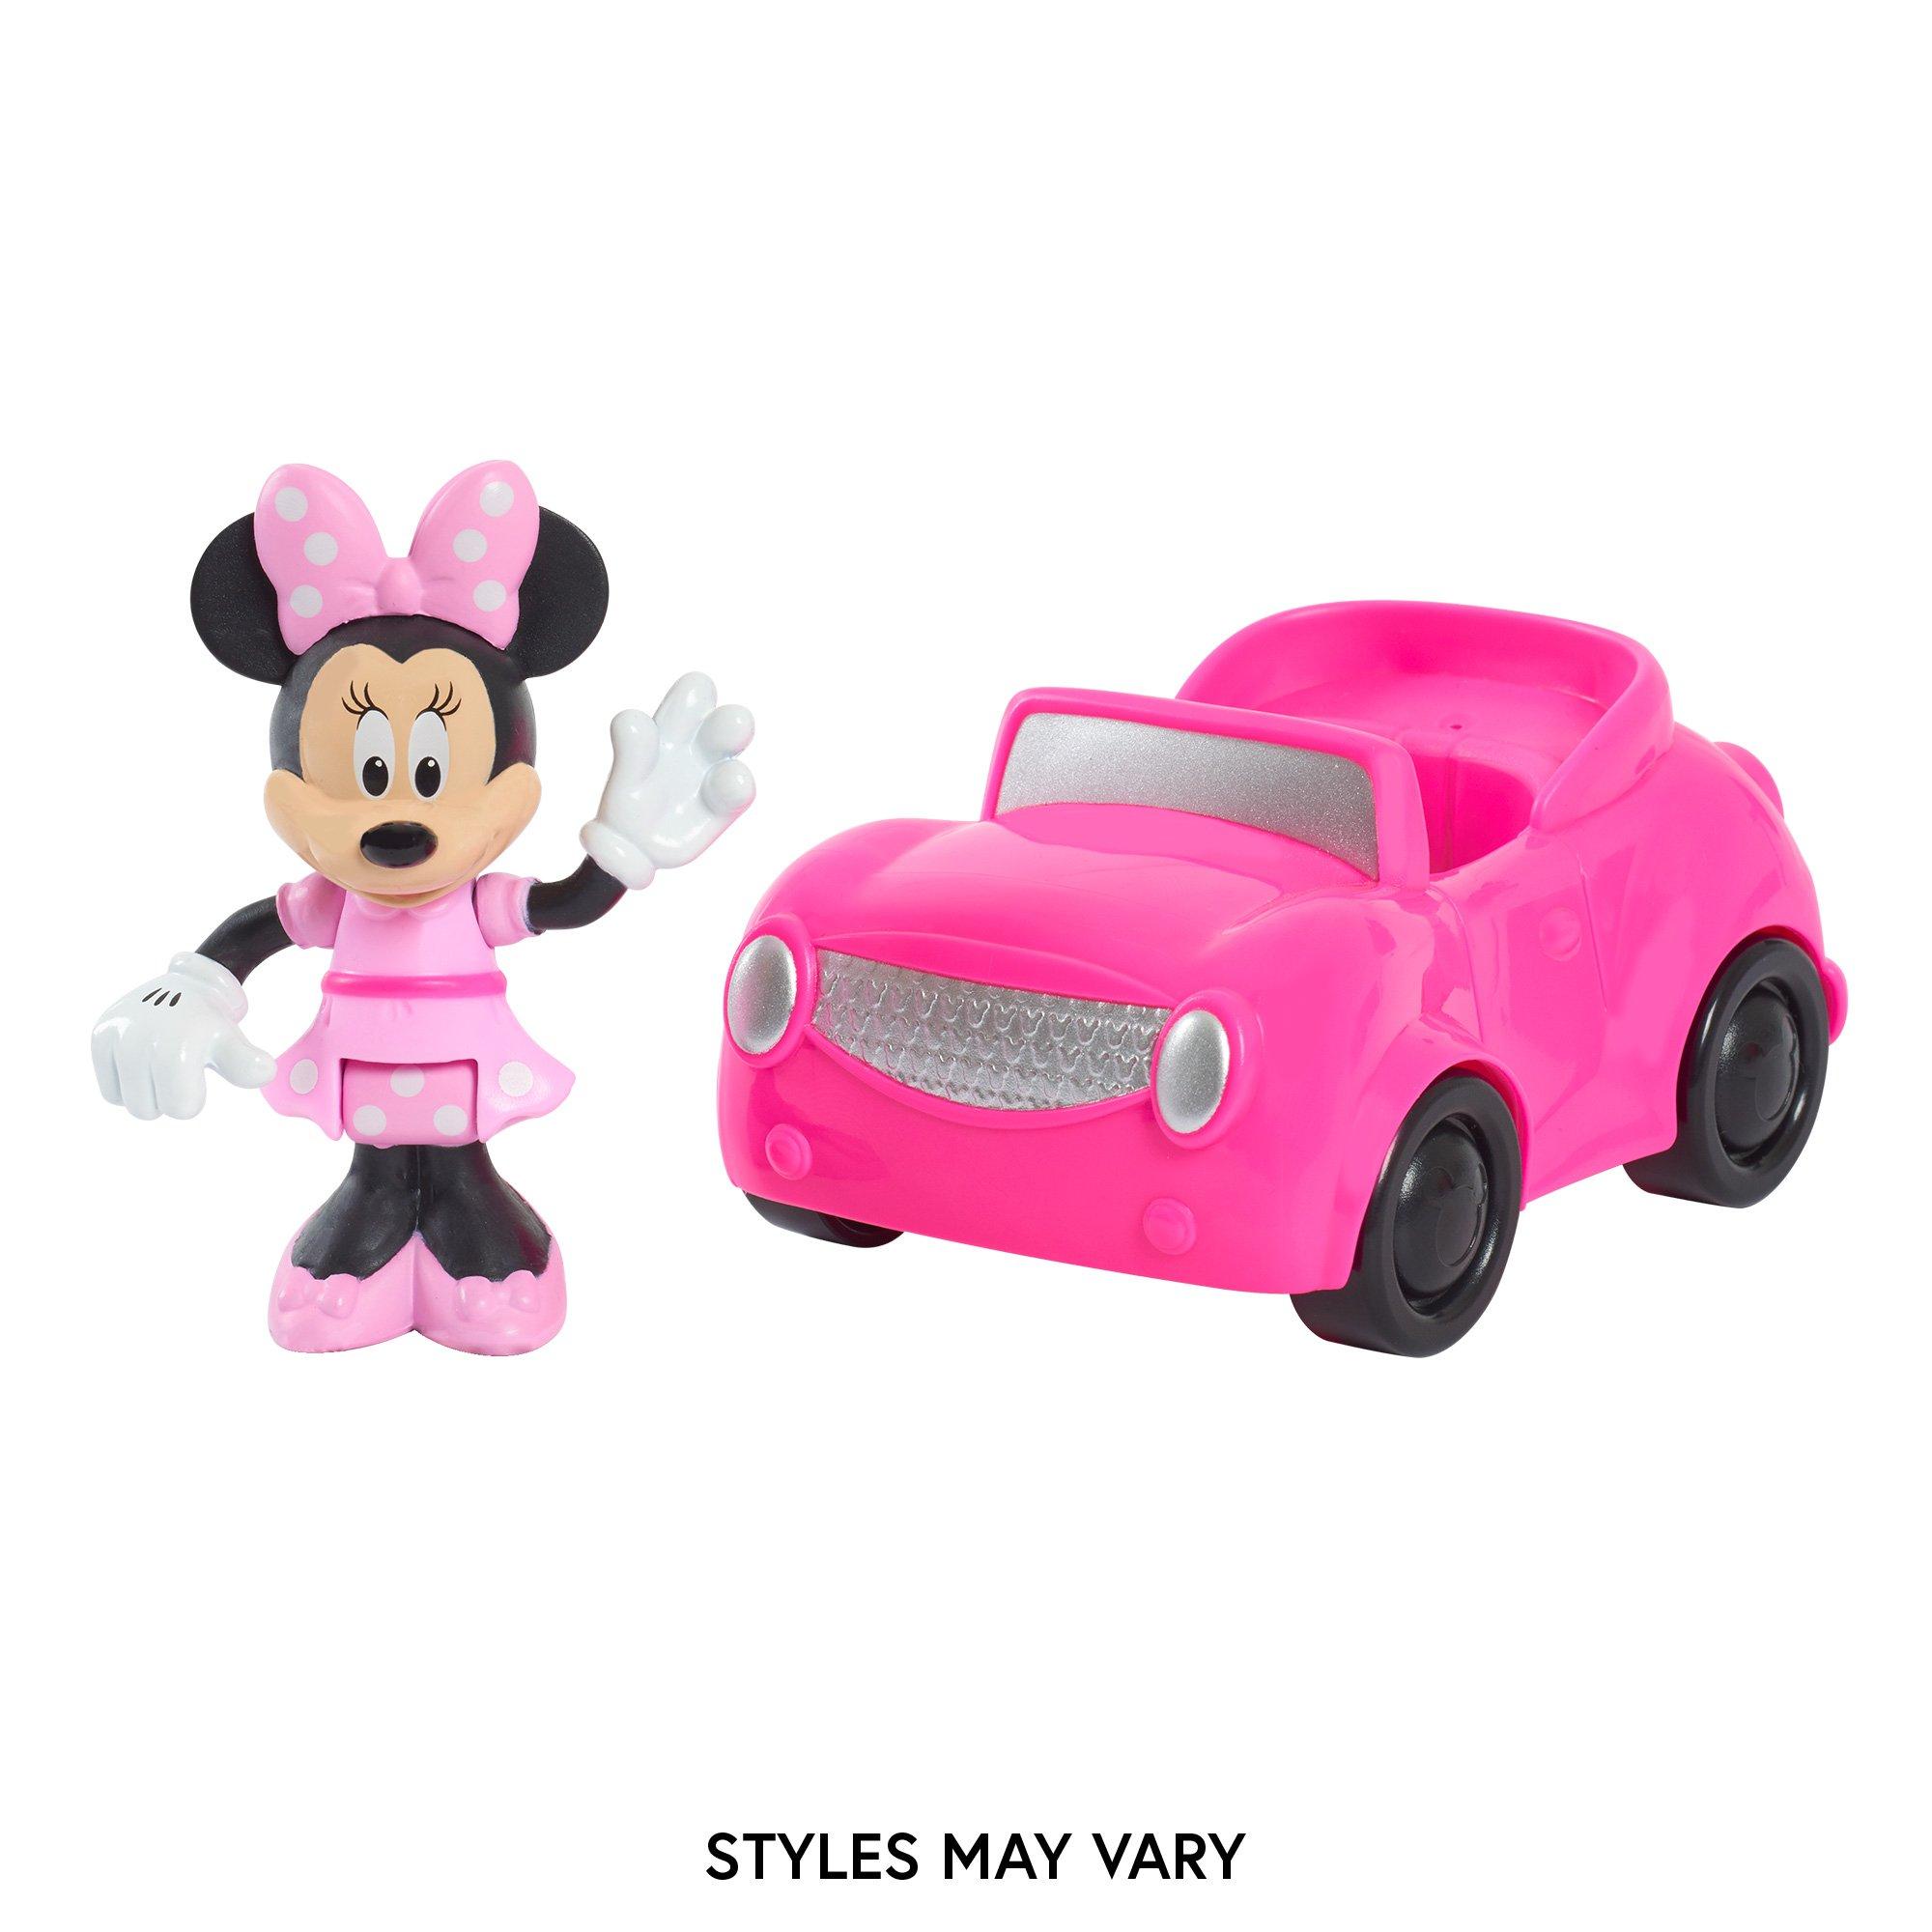 Extranjero Te mejorarás joyería Mickey Mouse Action Figure And Car | Party City